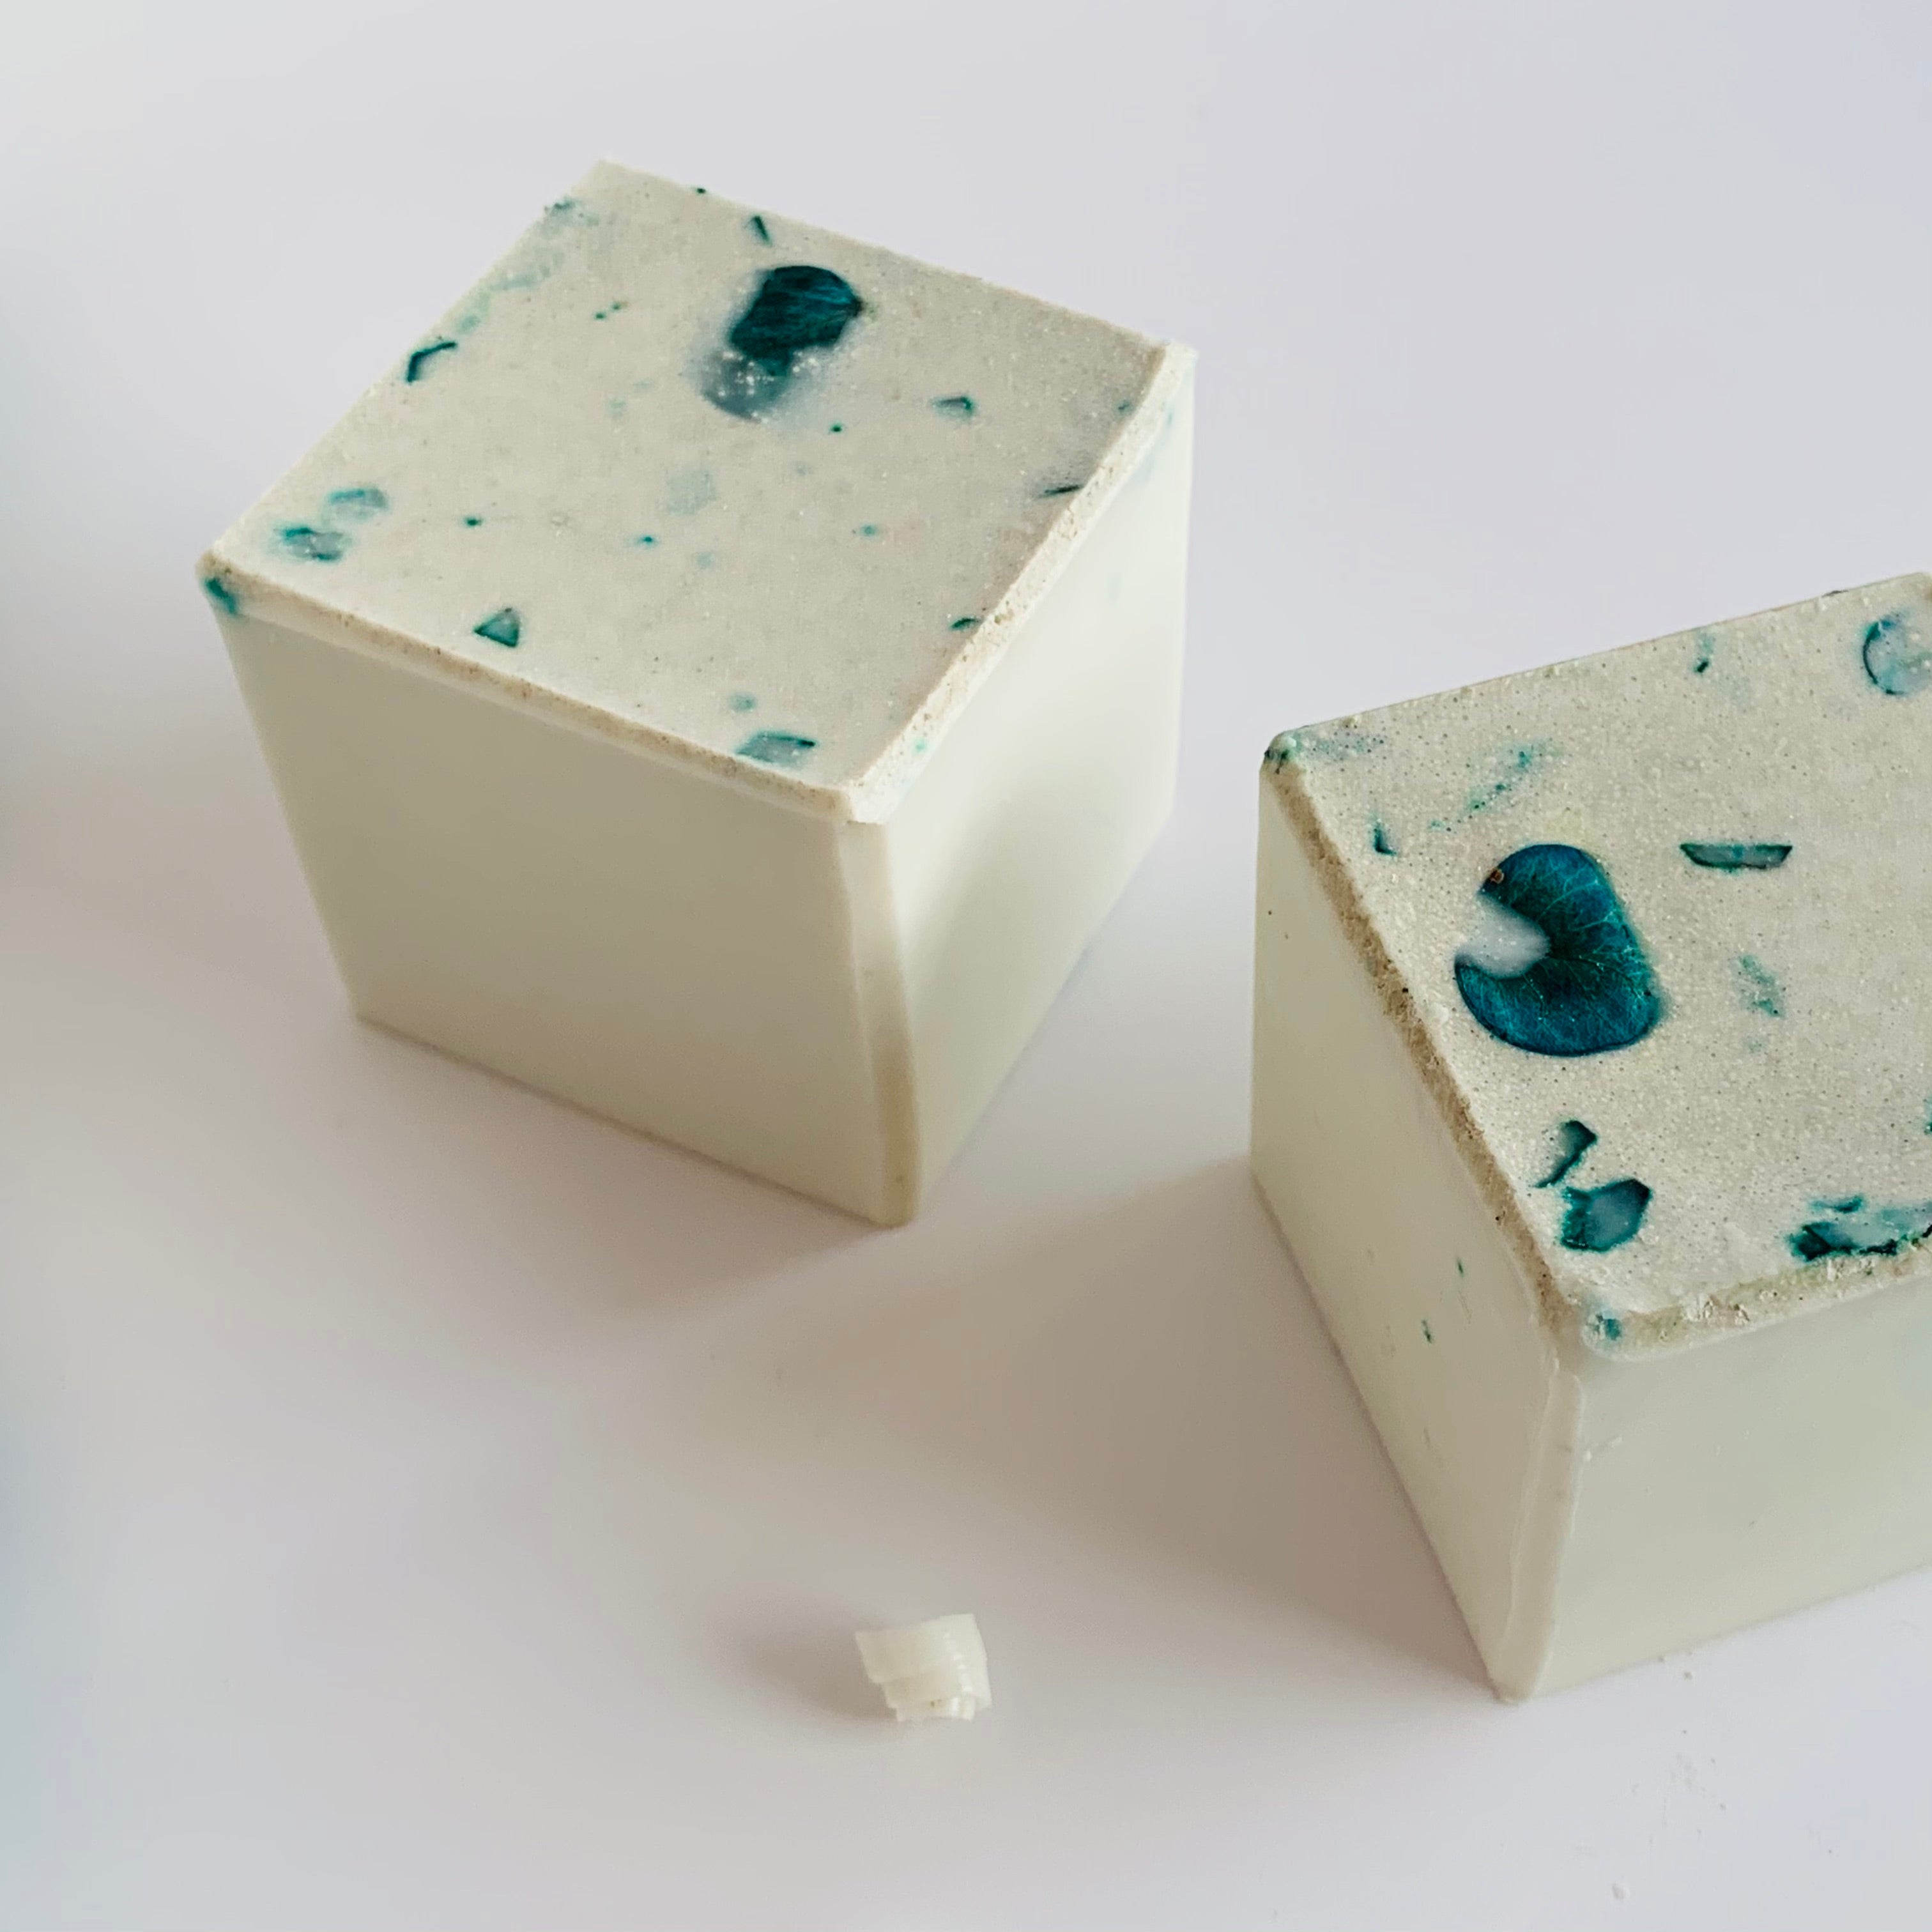 Nature's Garden Handmade Soap Cube